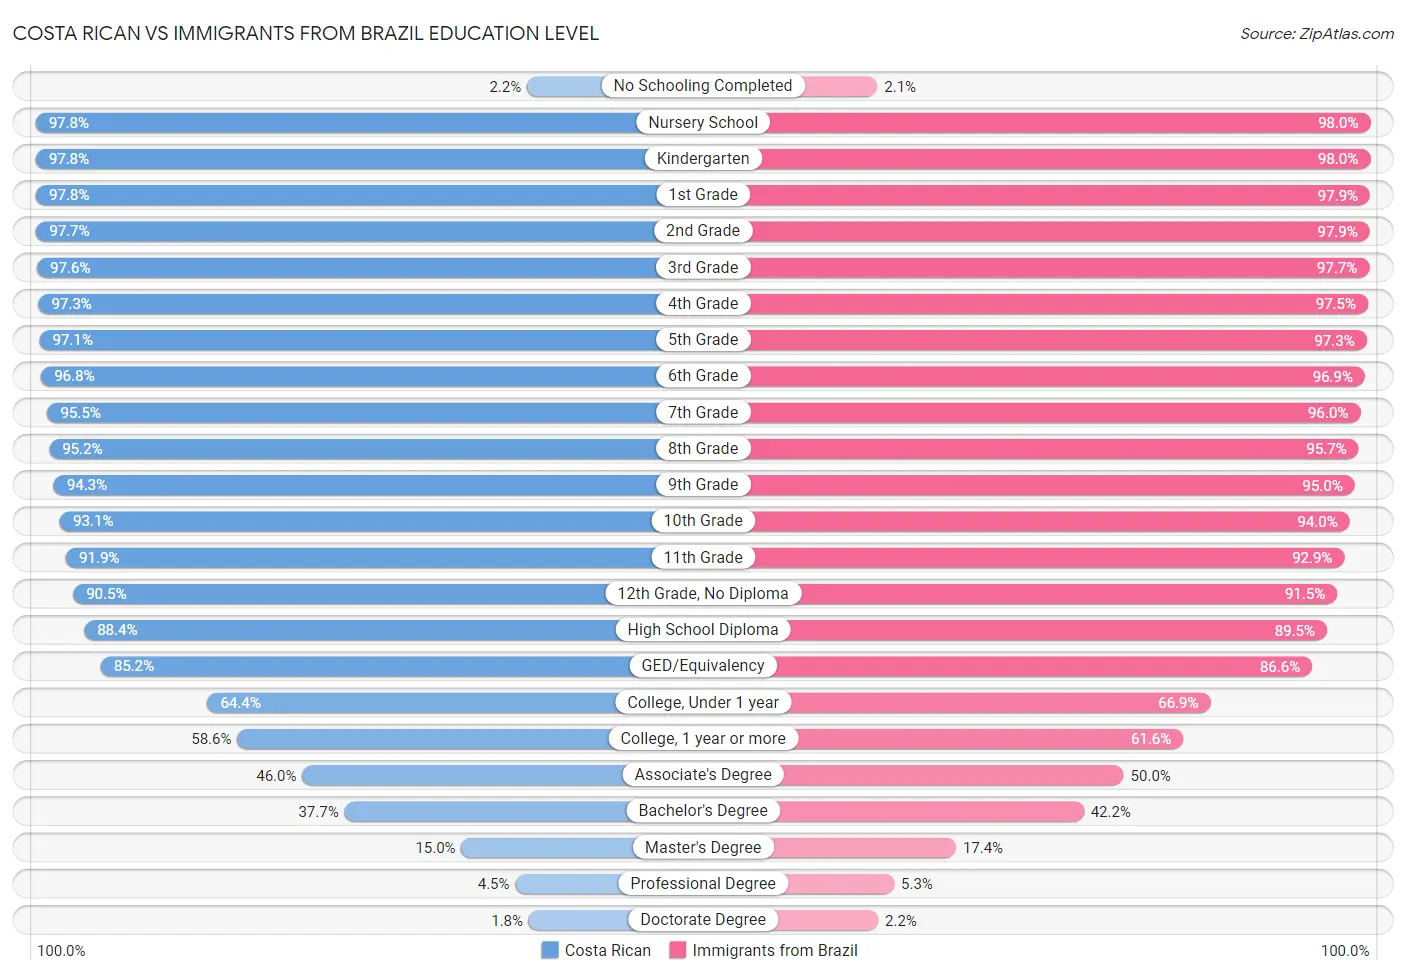 Costa Rican vs Immigrants from Brazil Education Level